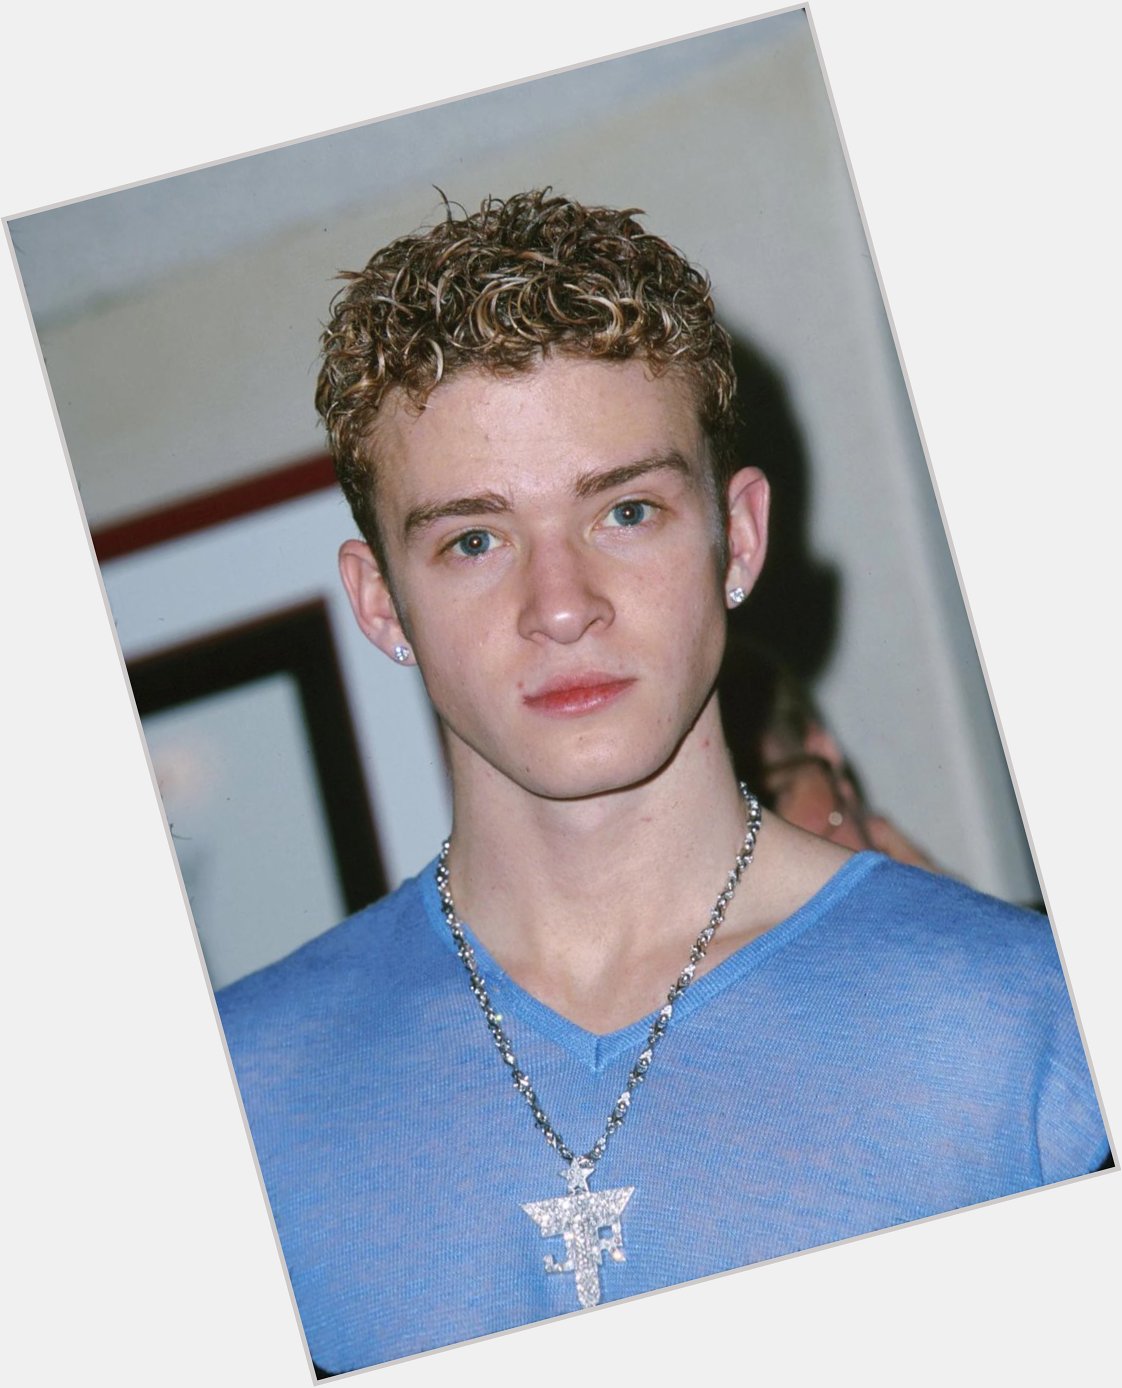 Happy 42nd birthday to Justin Timberlake I hope you had a wonderful 42nd bday      